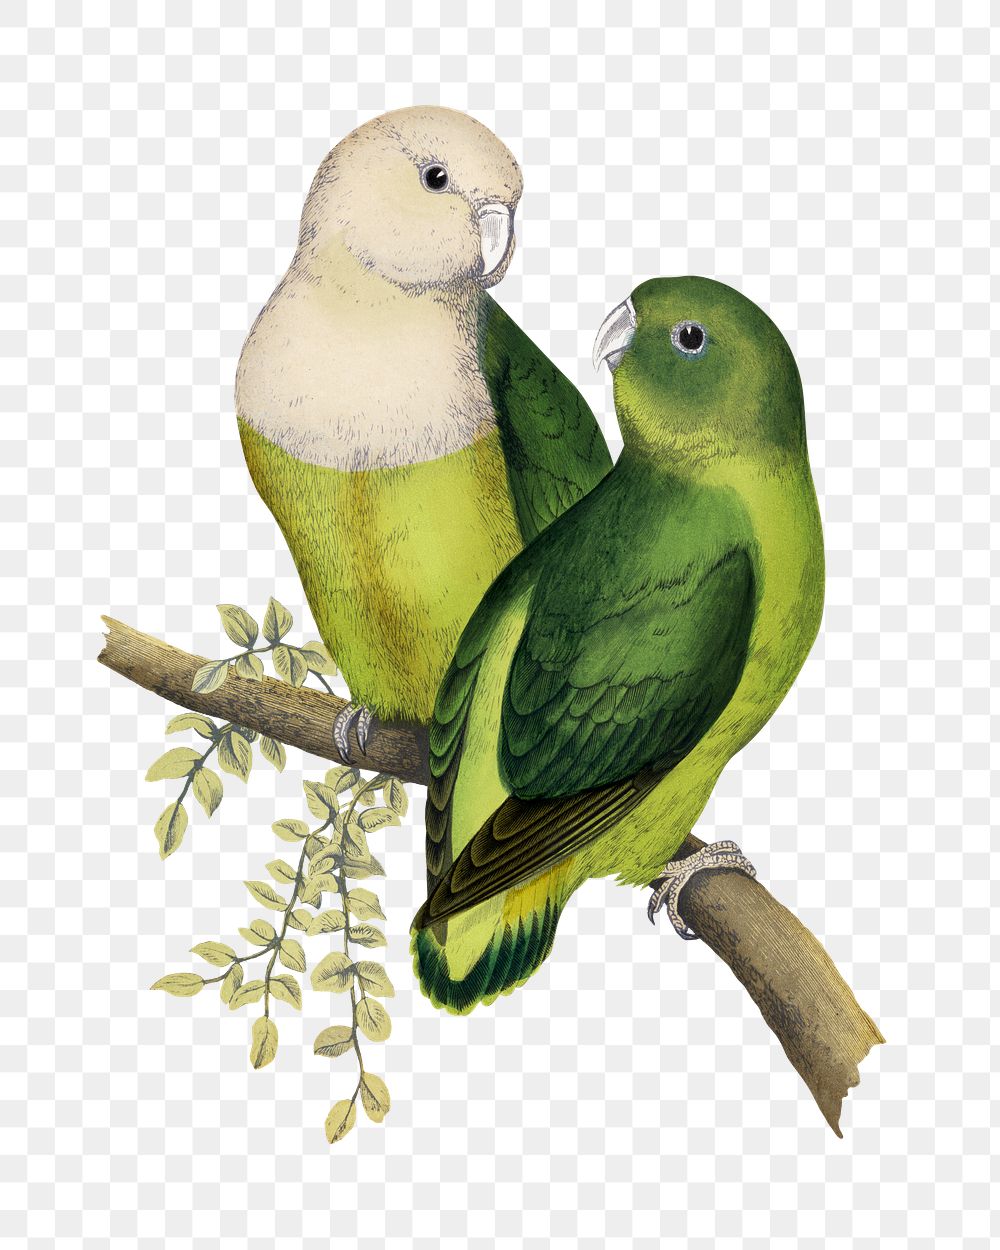 Vintage bird png Madagascar love-bird, transparent background. Remixed by rawpixel.